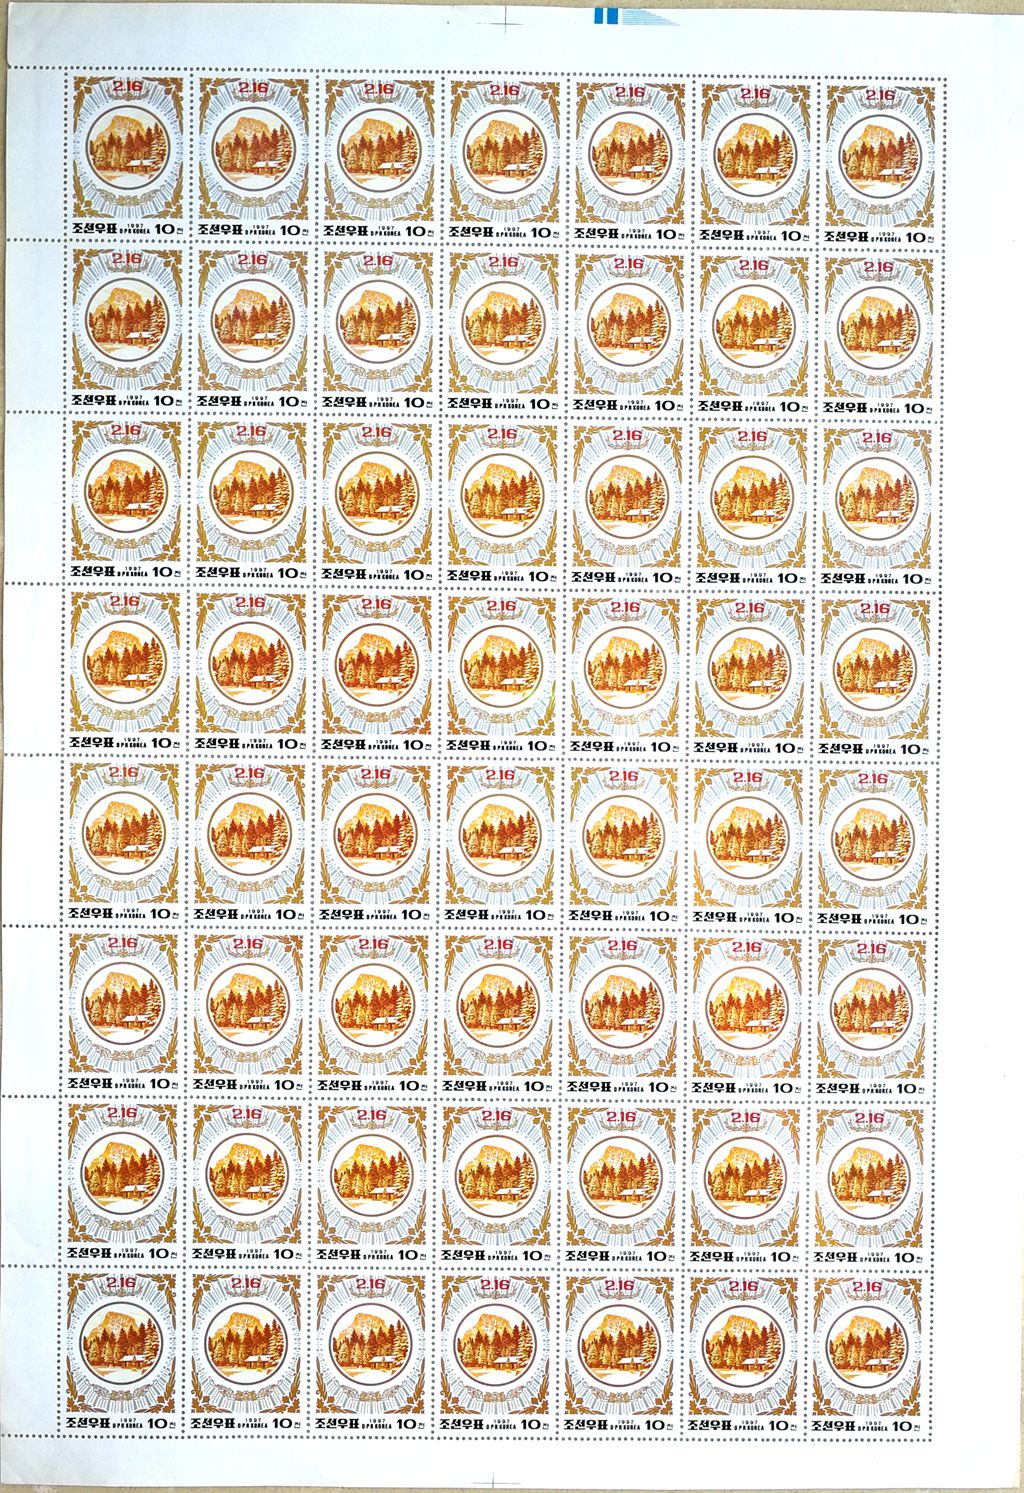 L4613, Korea "Birthday of Kim Jong Il", Full Sheet 56 Pcs Stamps, 1997